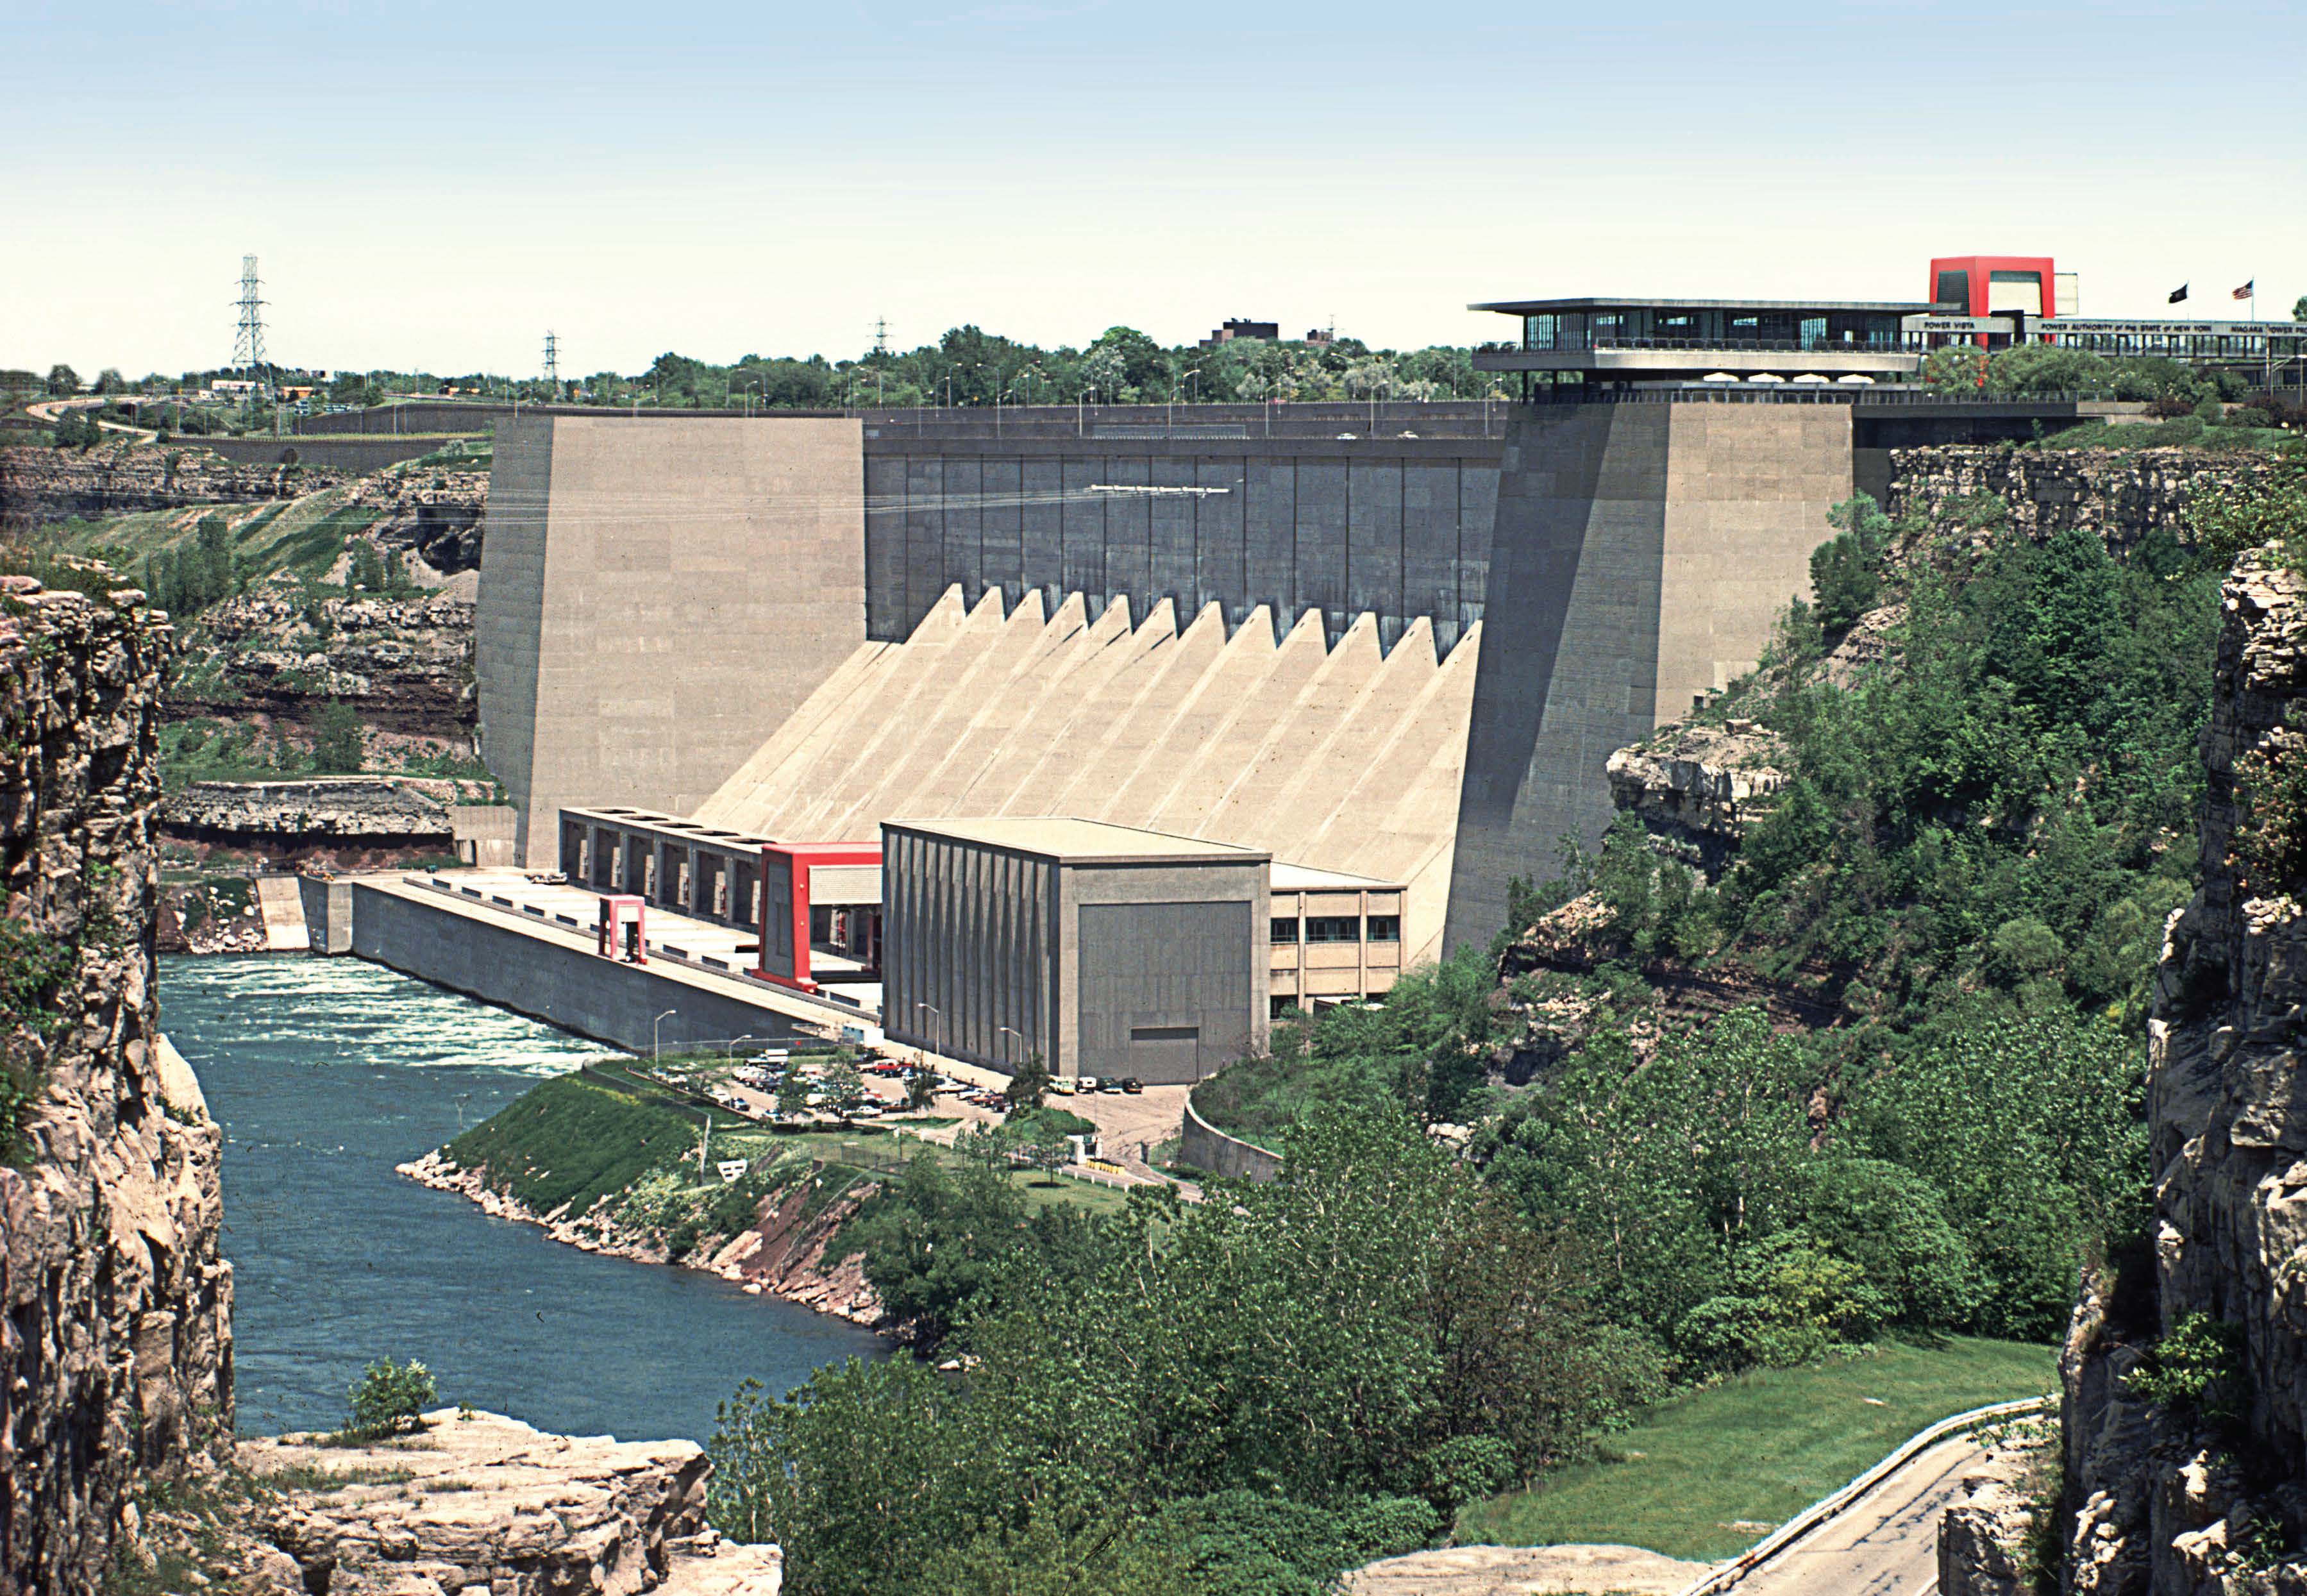 Hydroelectric wonder: the Robert Moses Niagara Power Plant - The Municipal